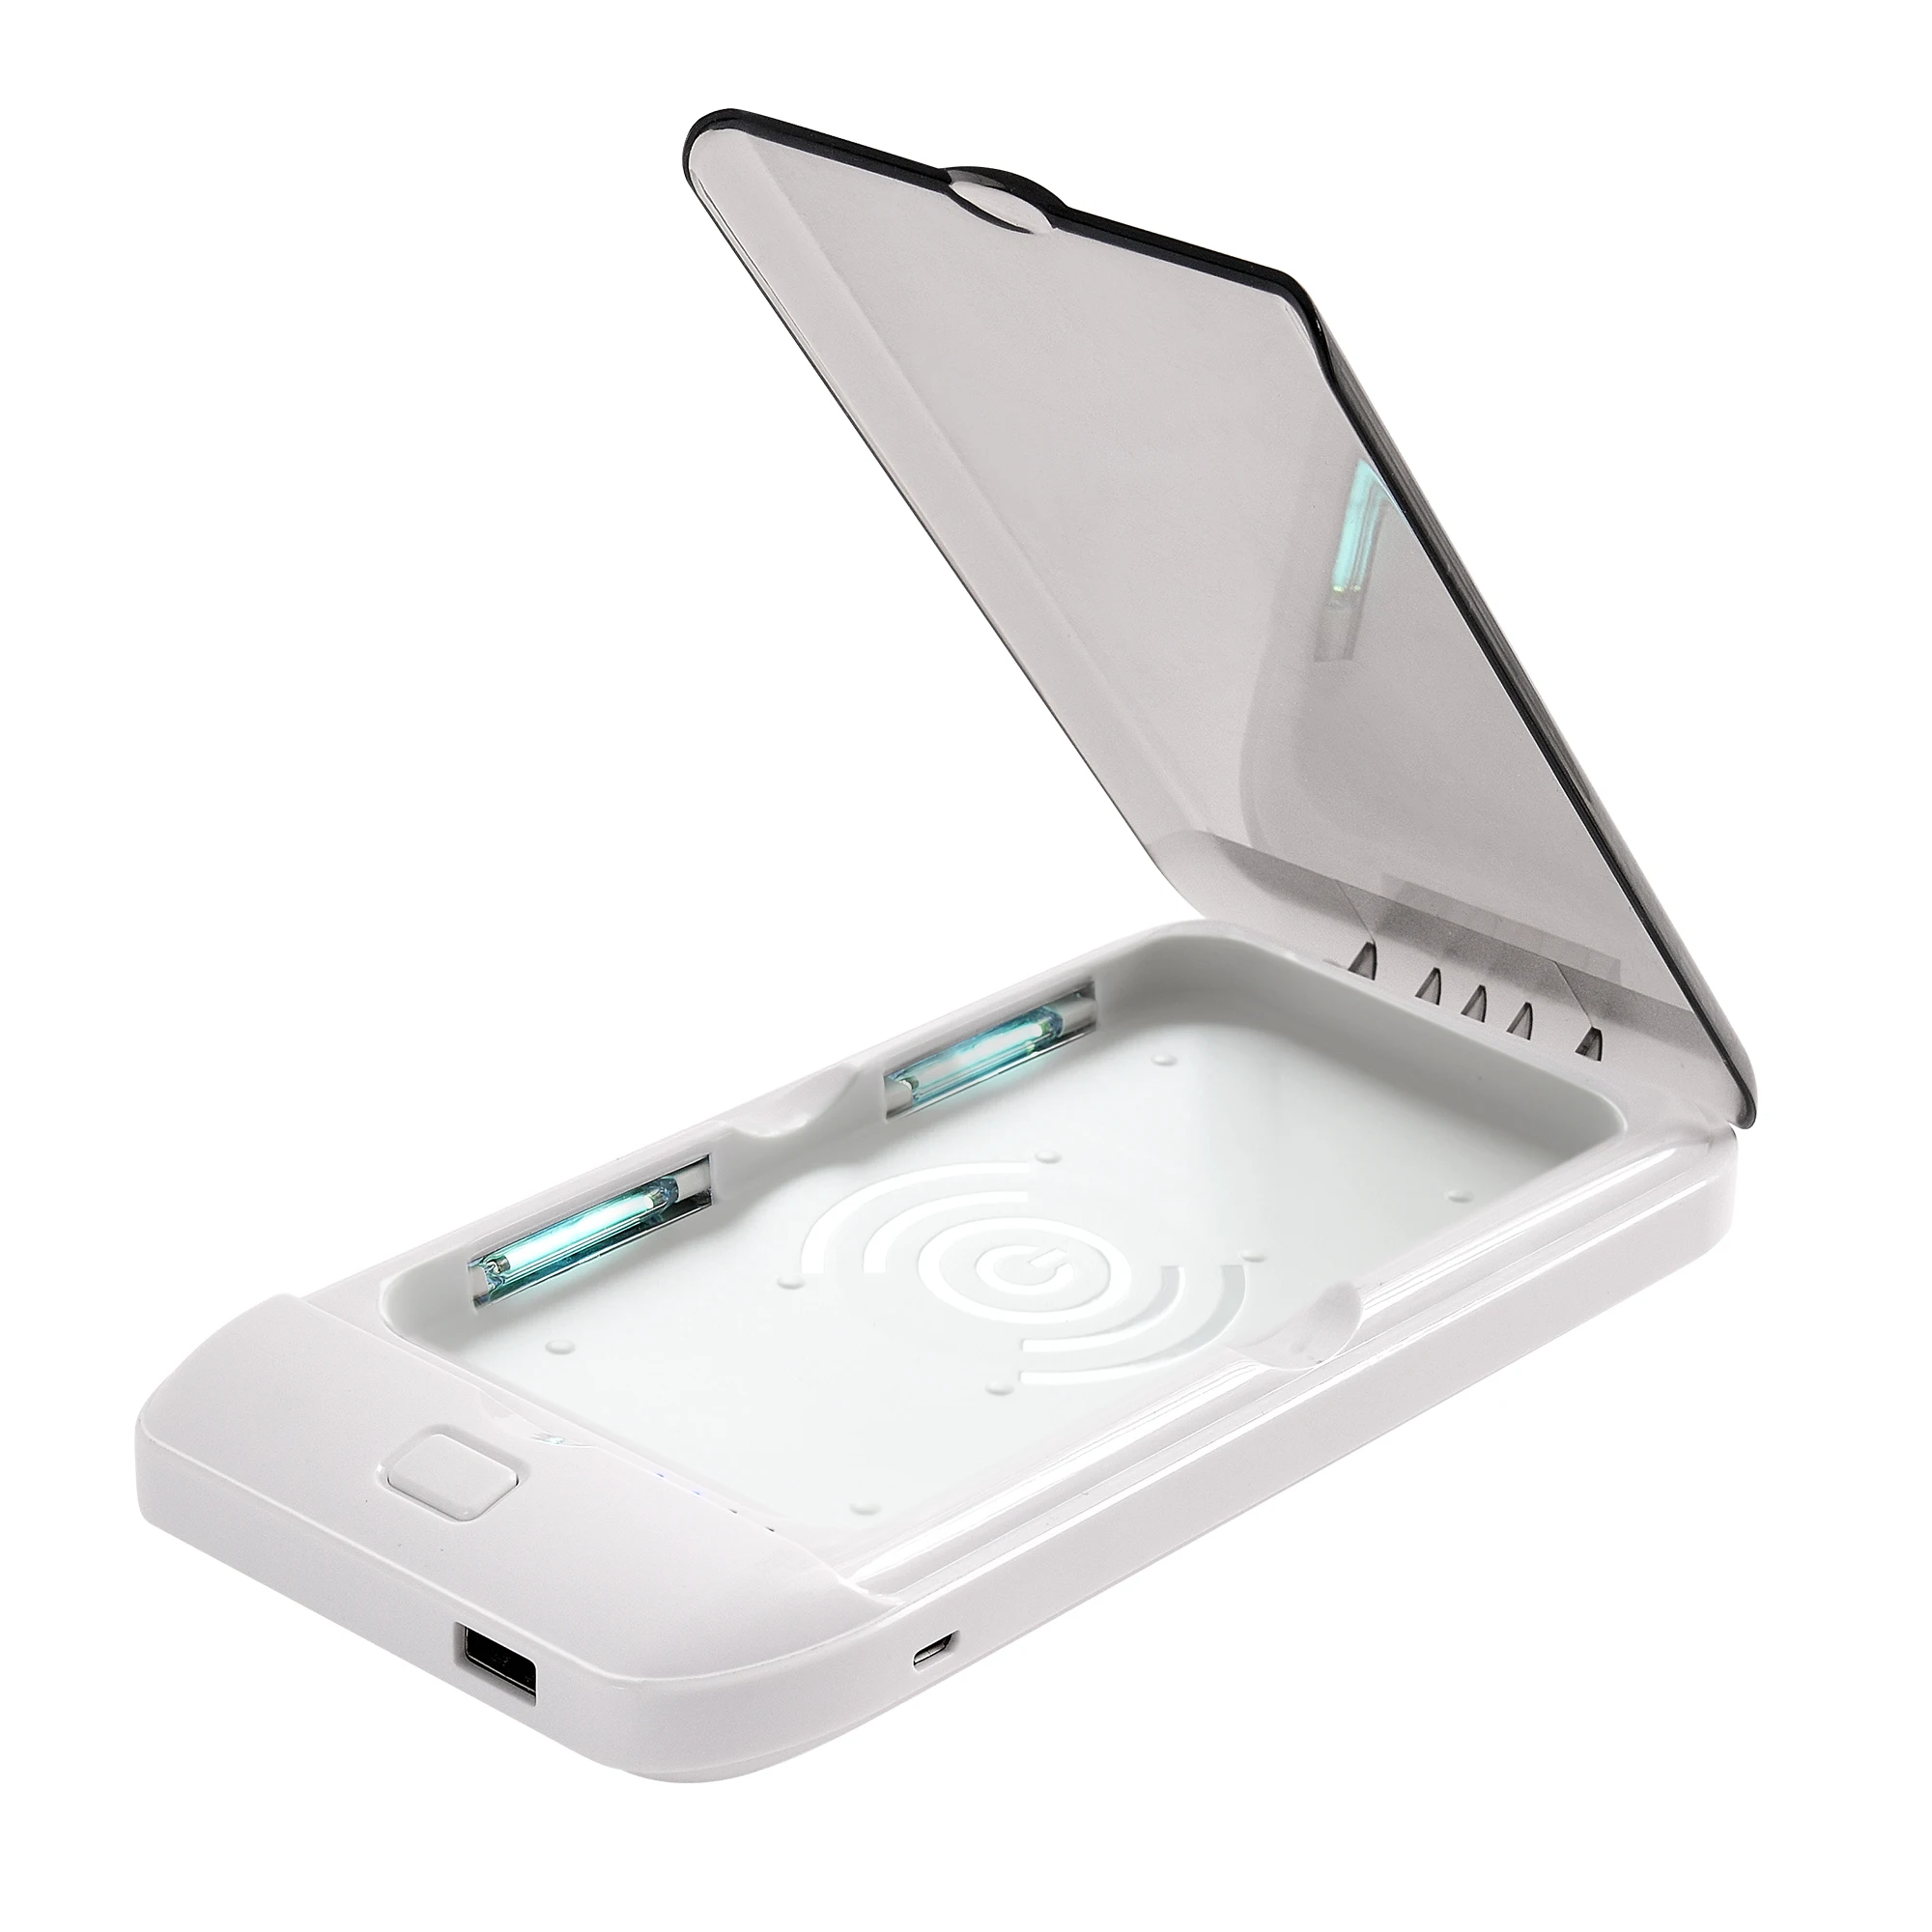 UV  lamp sterilizer for MobilePhone Sterilizer/Smartphone Sanitizer/Phone Cleaner